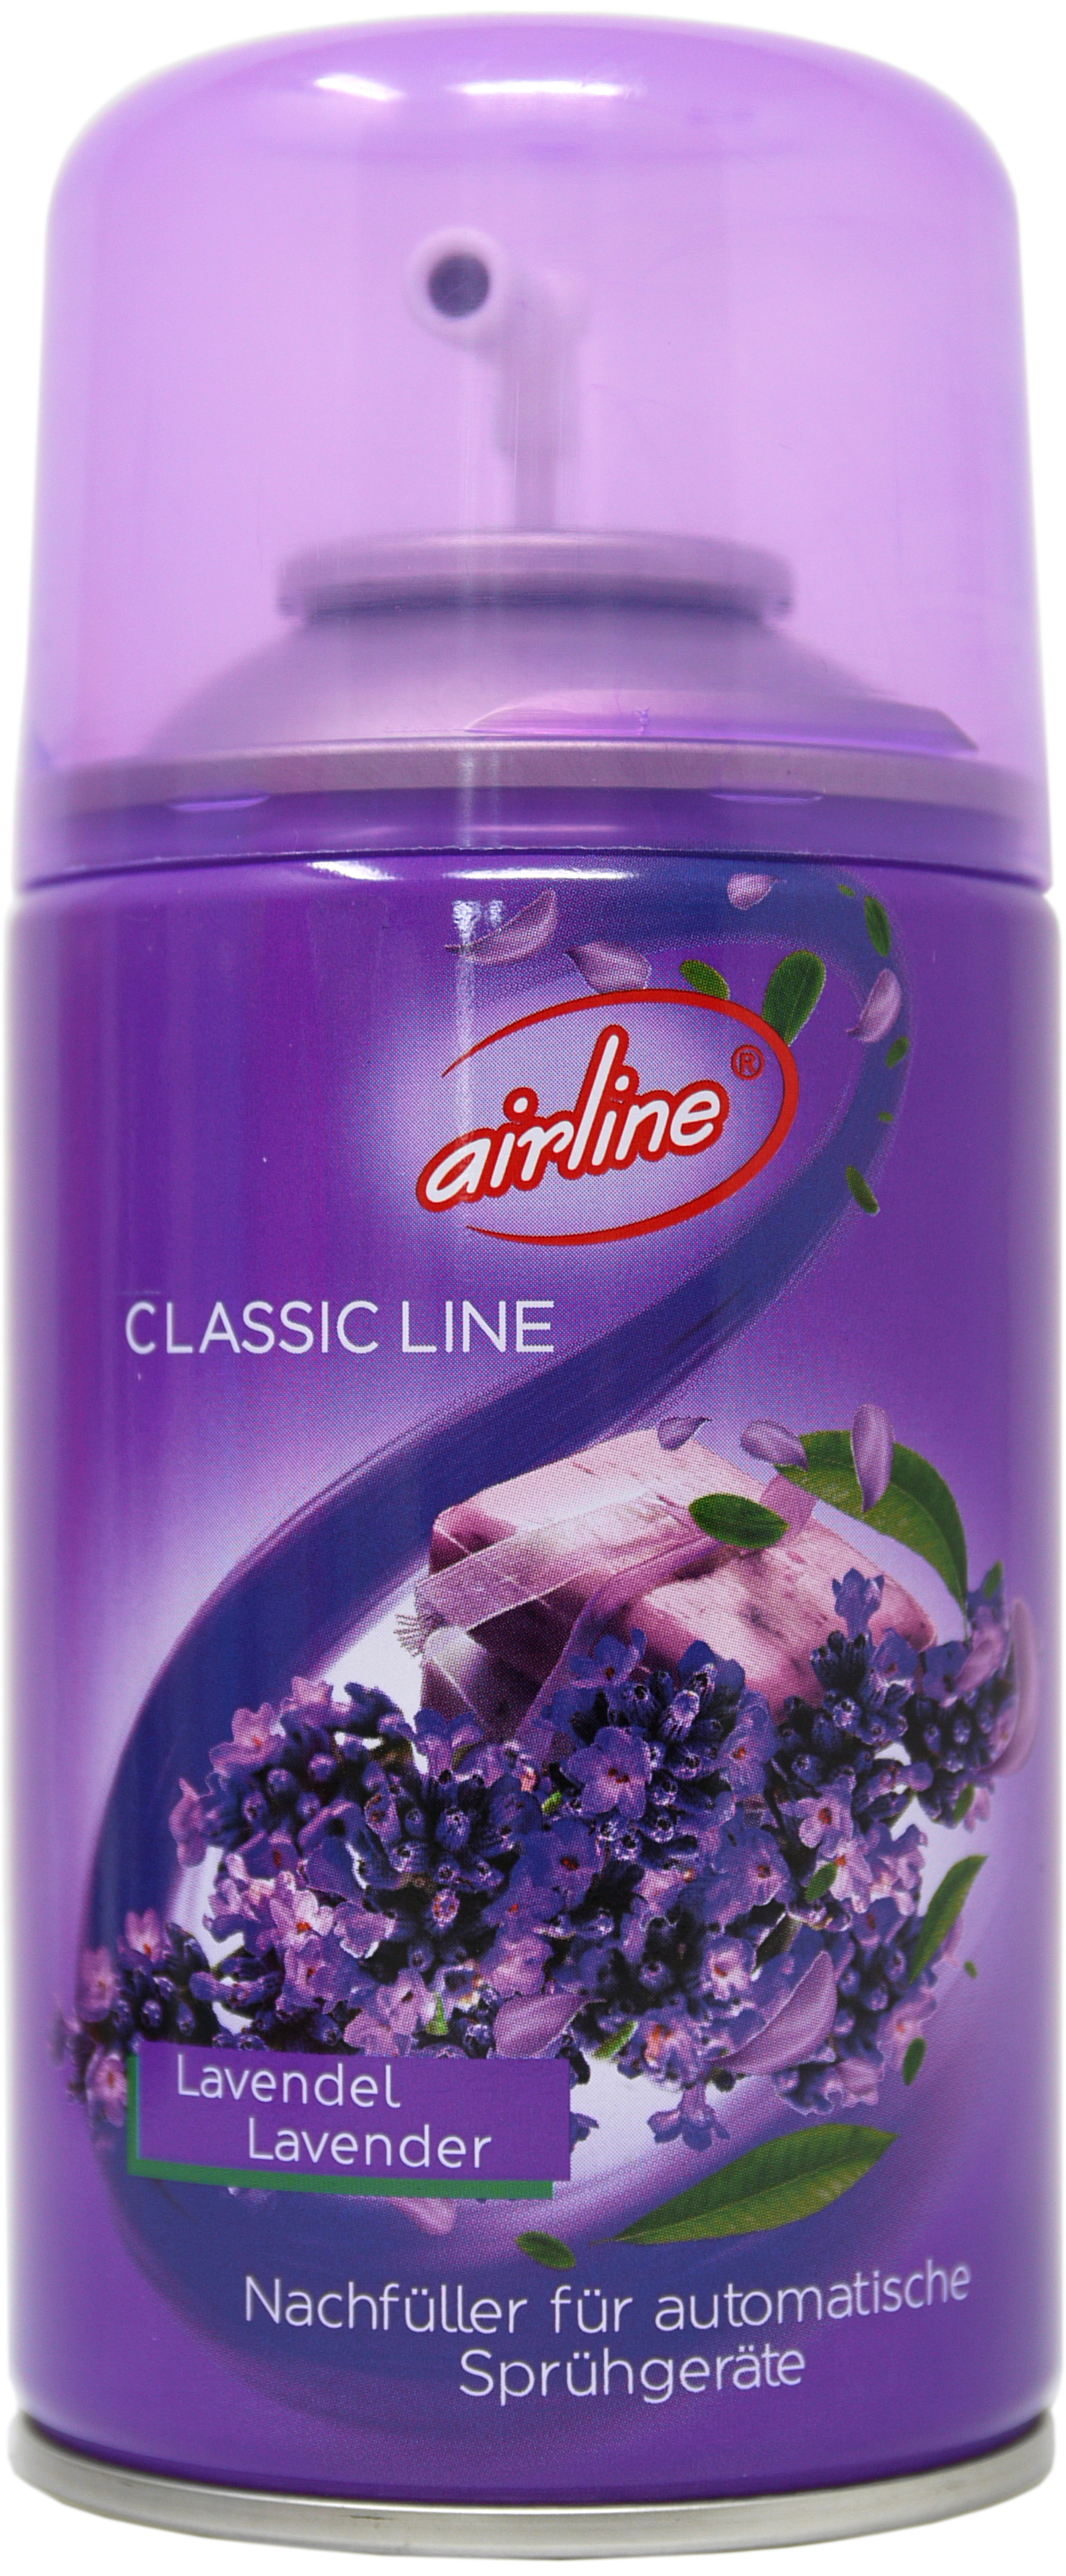 00504 - airline Classic Line Lavendel Nachfüllkartusche 250 ml